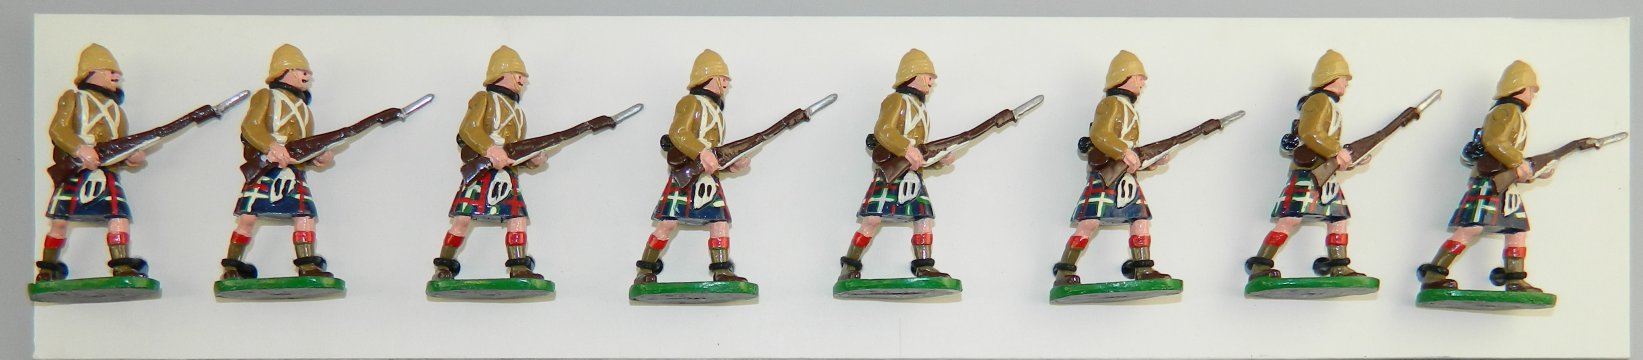 Scottish Highlanders Advancing